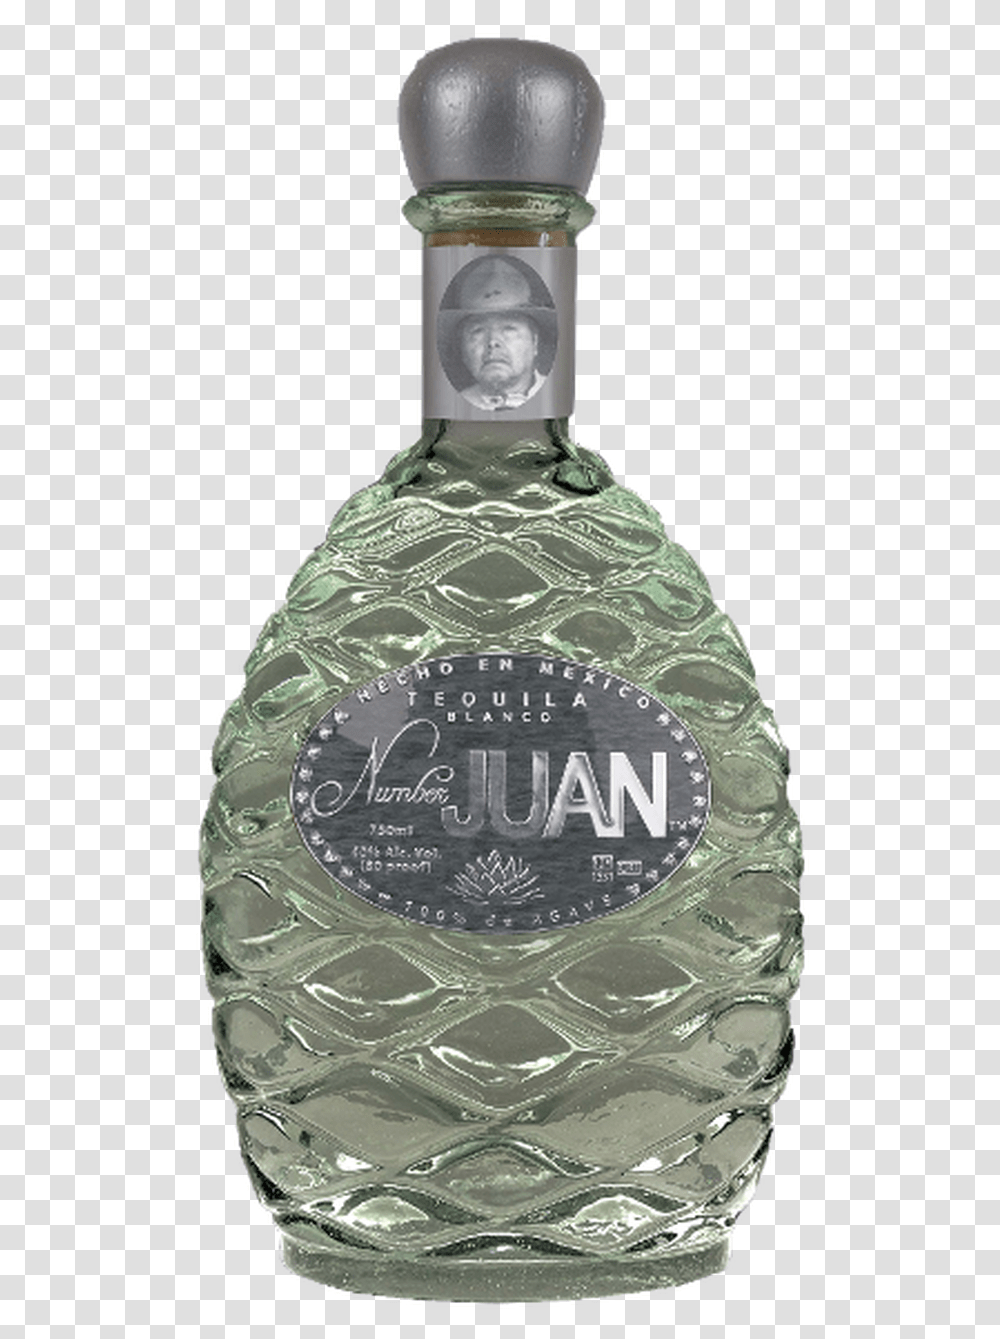 Number Juan Blanco Tequila Number Juan Tequila, Absinthe, Liquor, Alcohol, Beverage Transparent Png